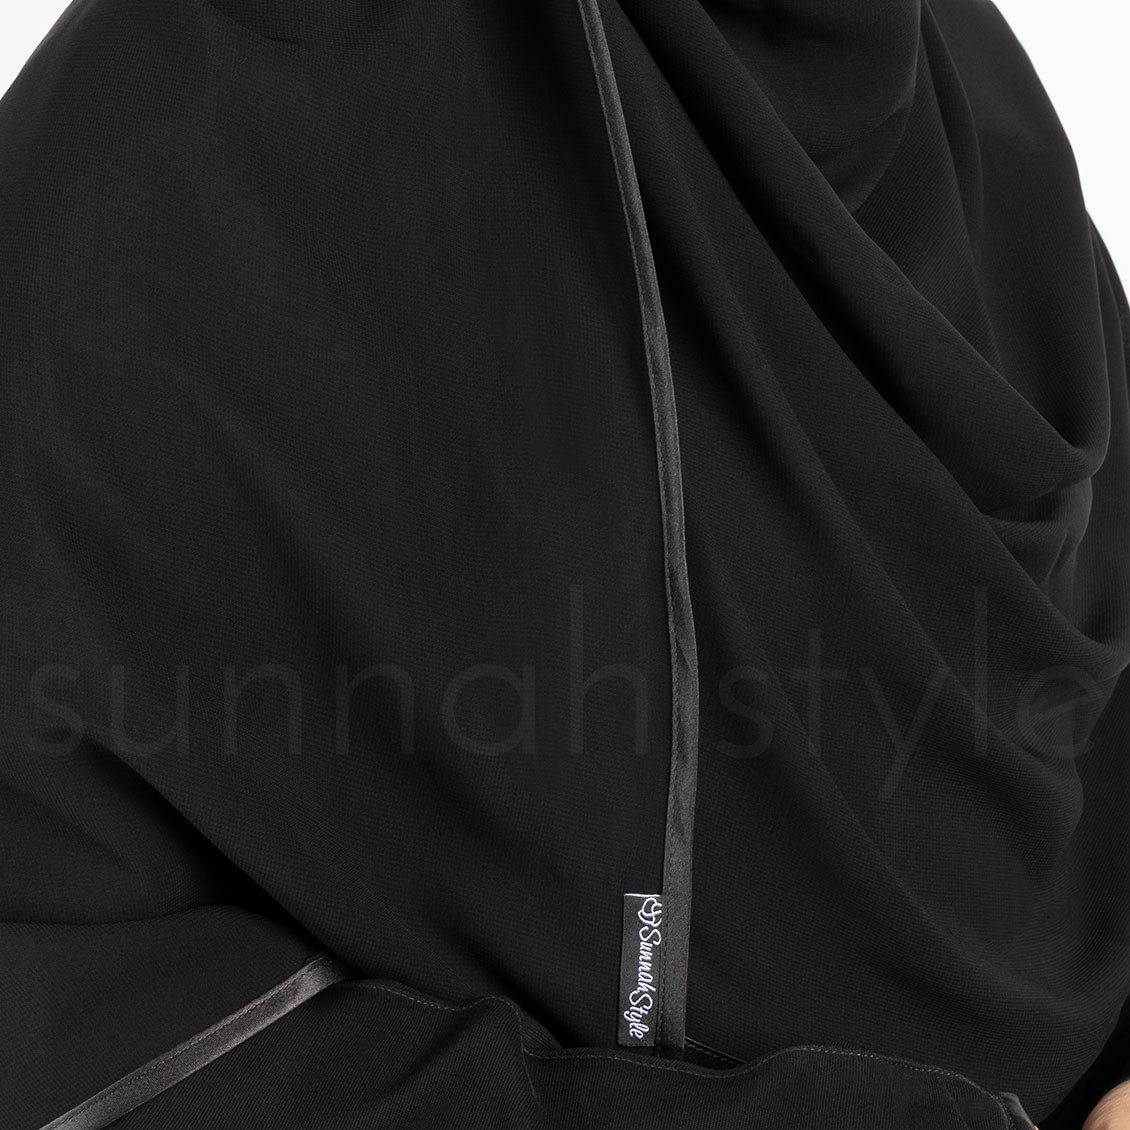 Sunnah Style Satin Trimmed Shayla Large Black